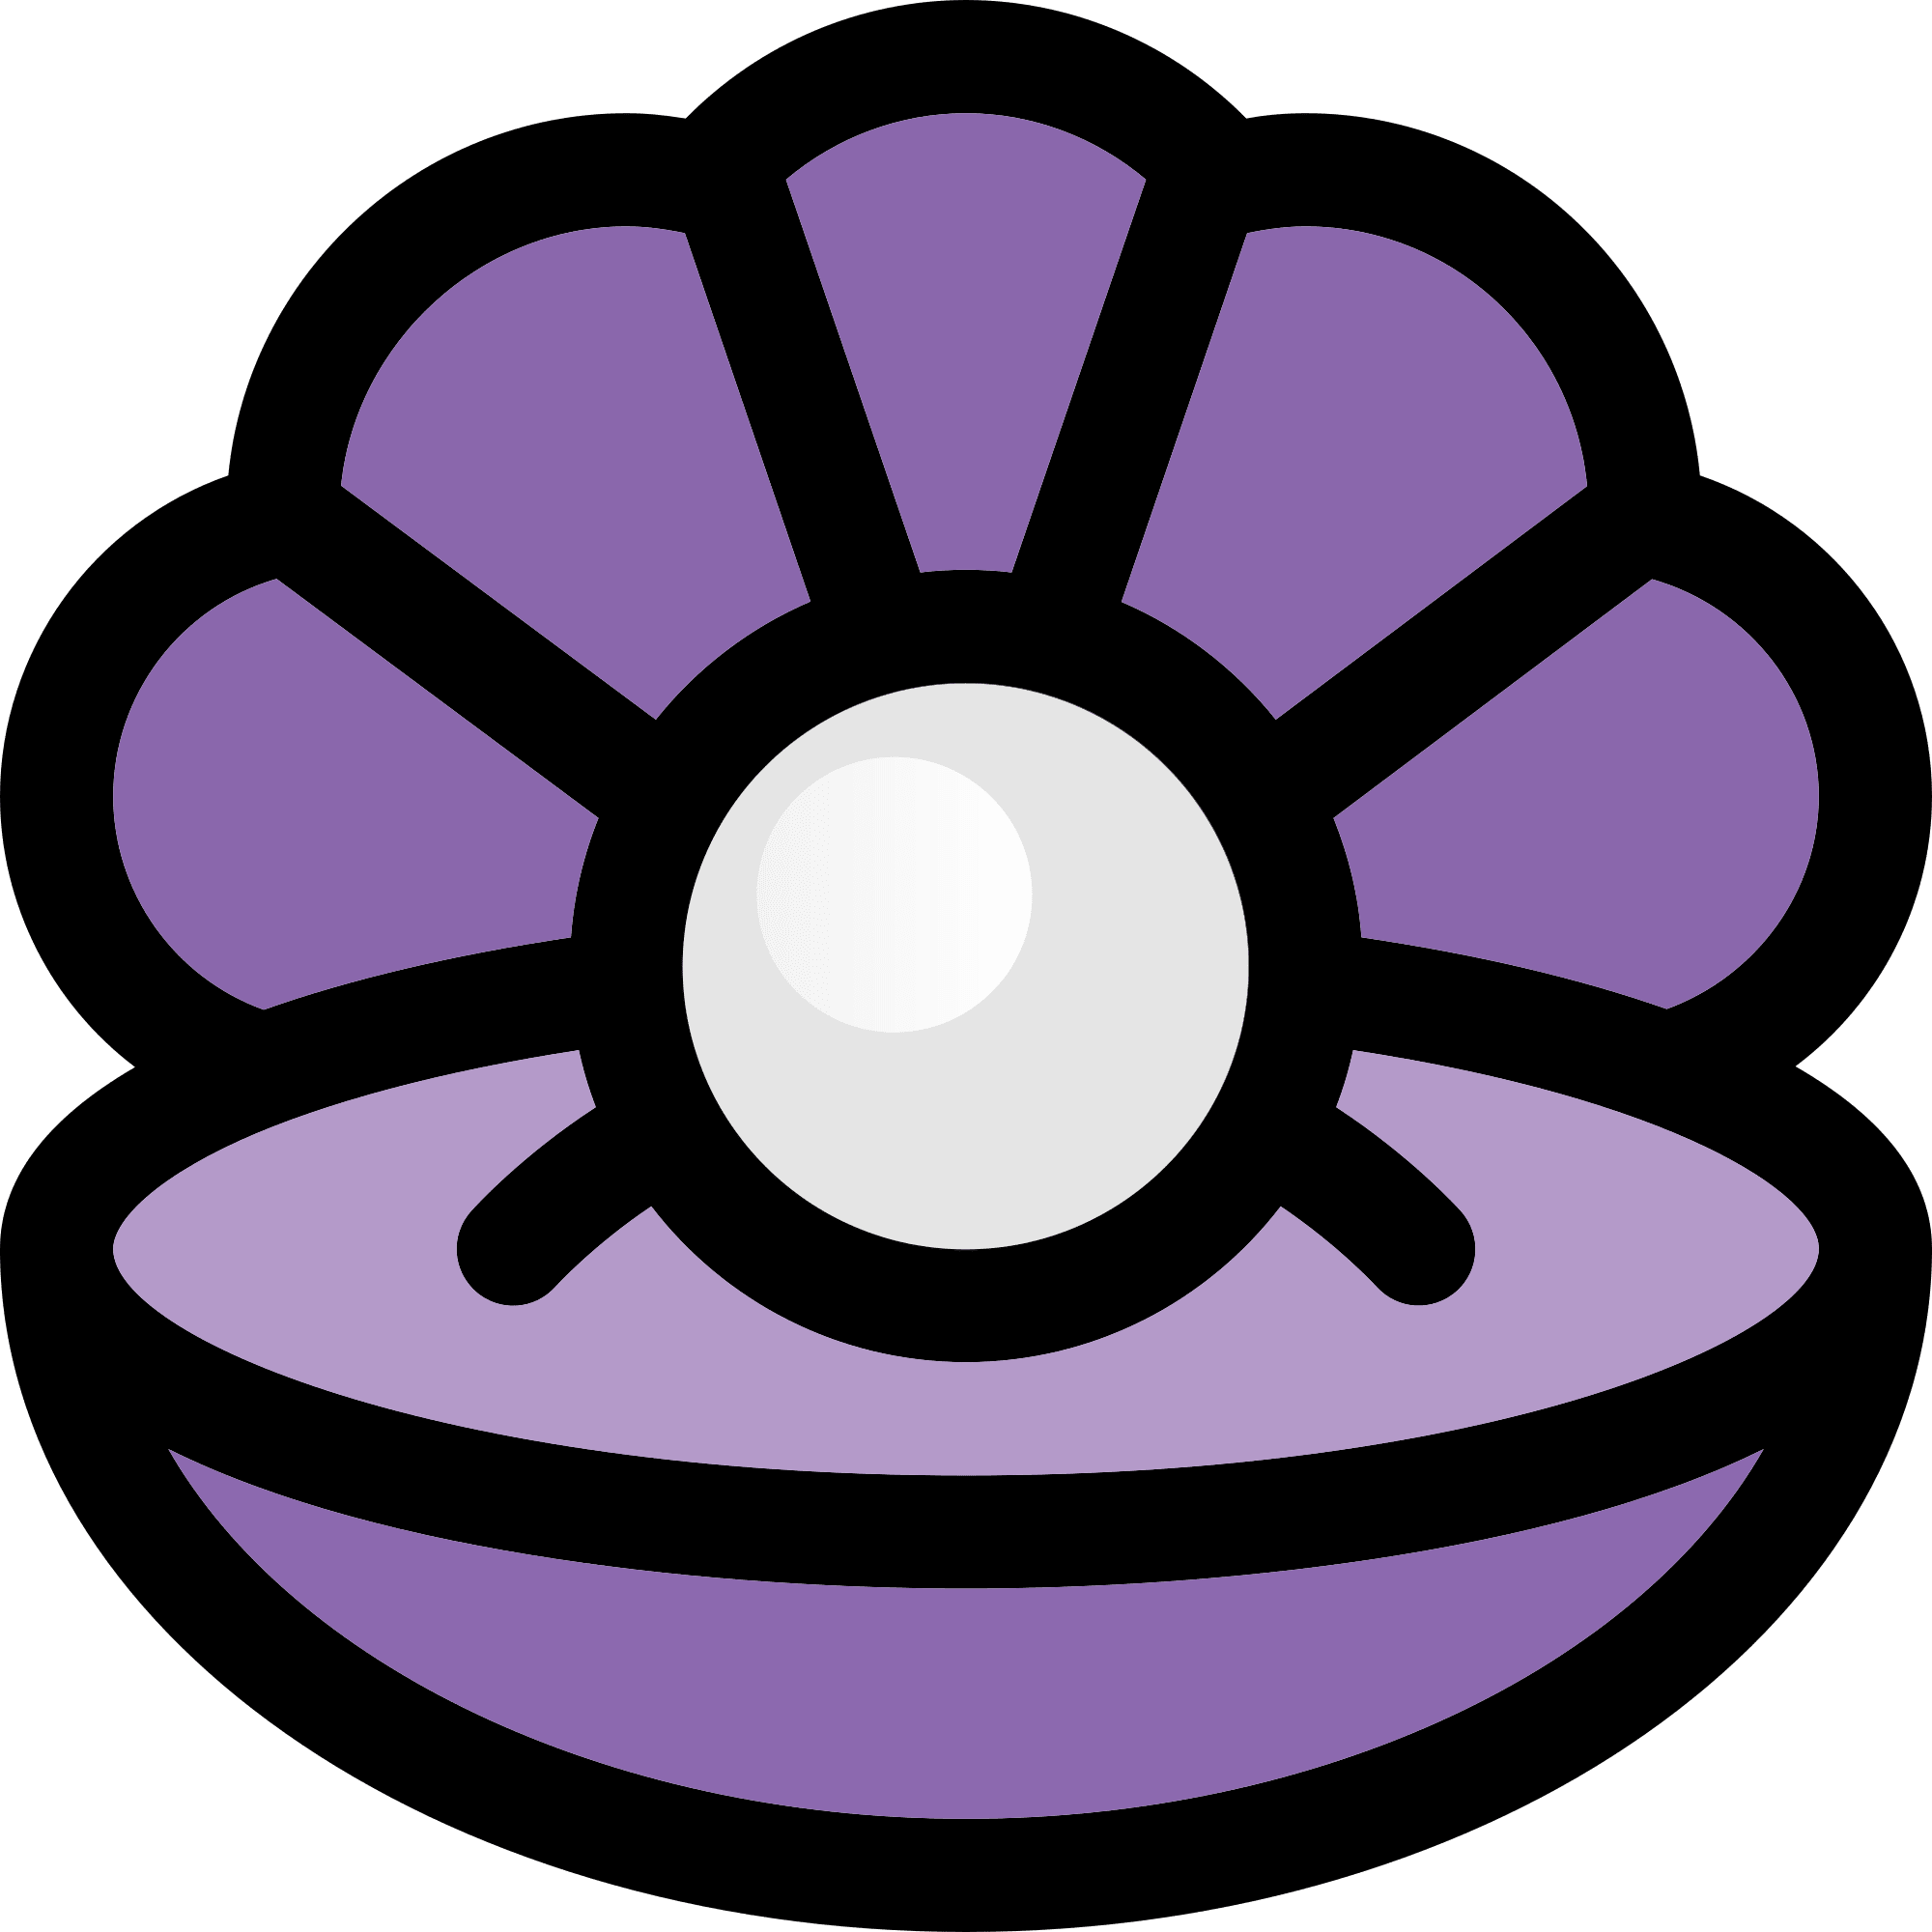 Pearl logo in png format